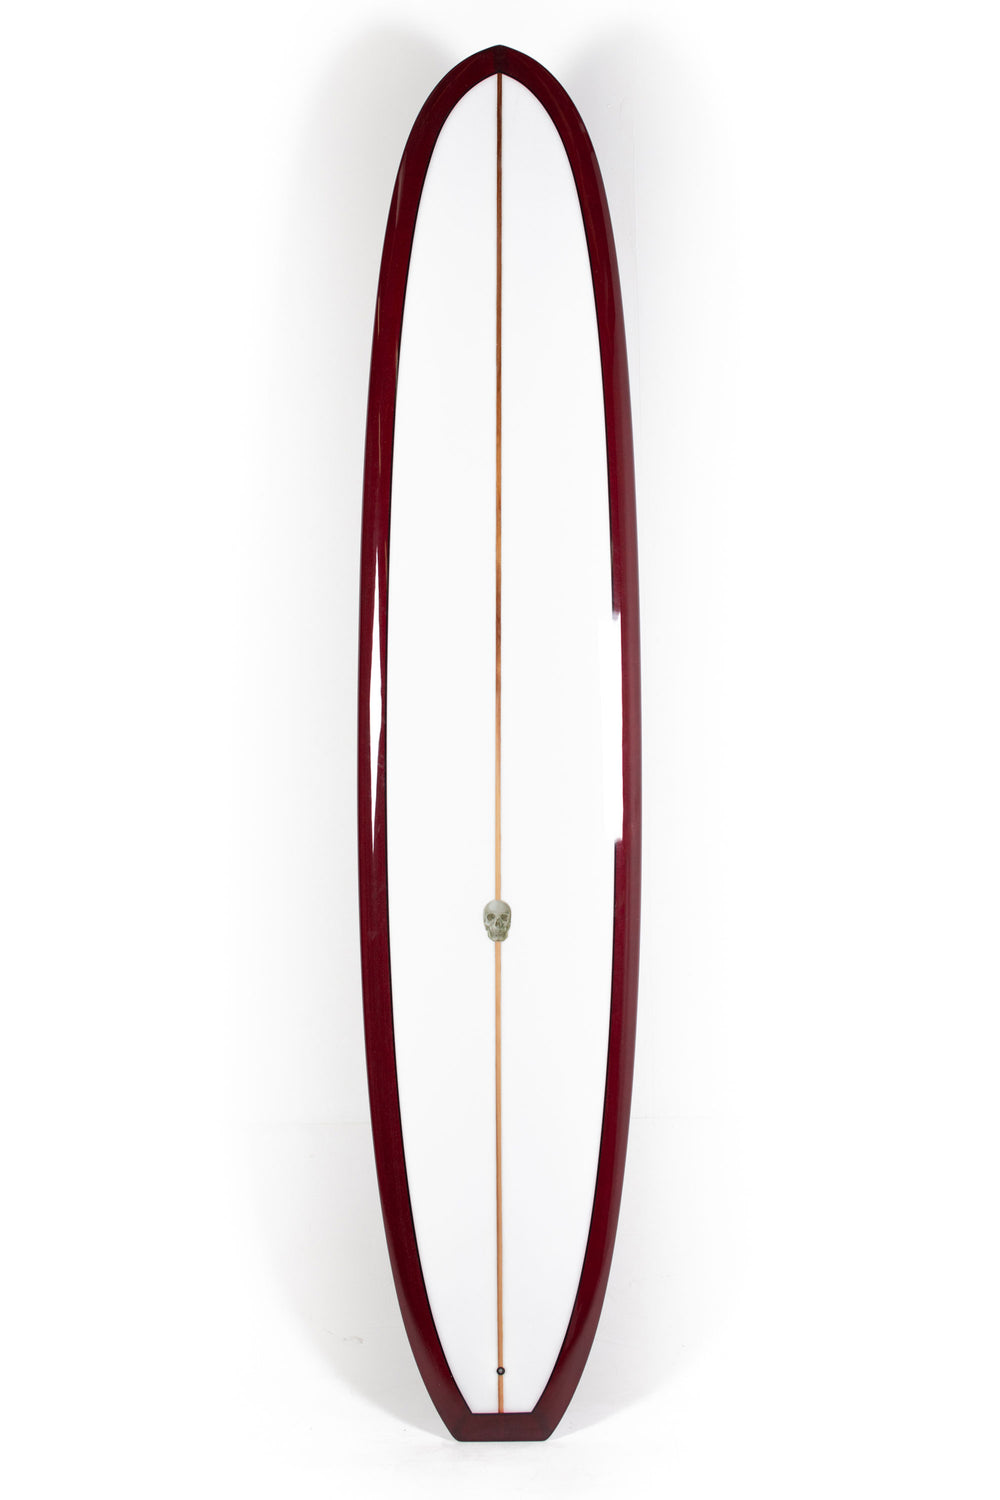 Pukas Surf Shop - Christenson Surfboard  - SCARLET BEGONIA by Chris Christenson - 9'5” x 23 3/16